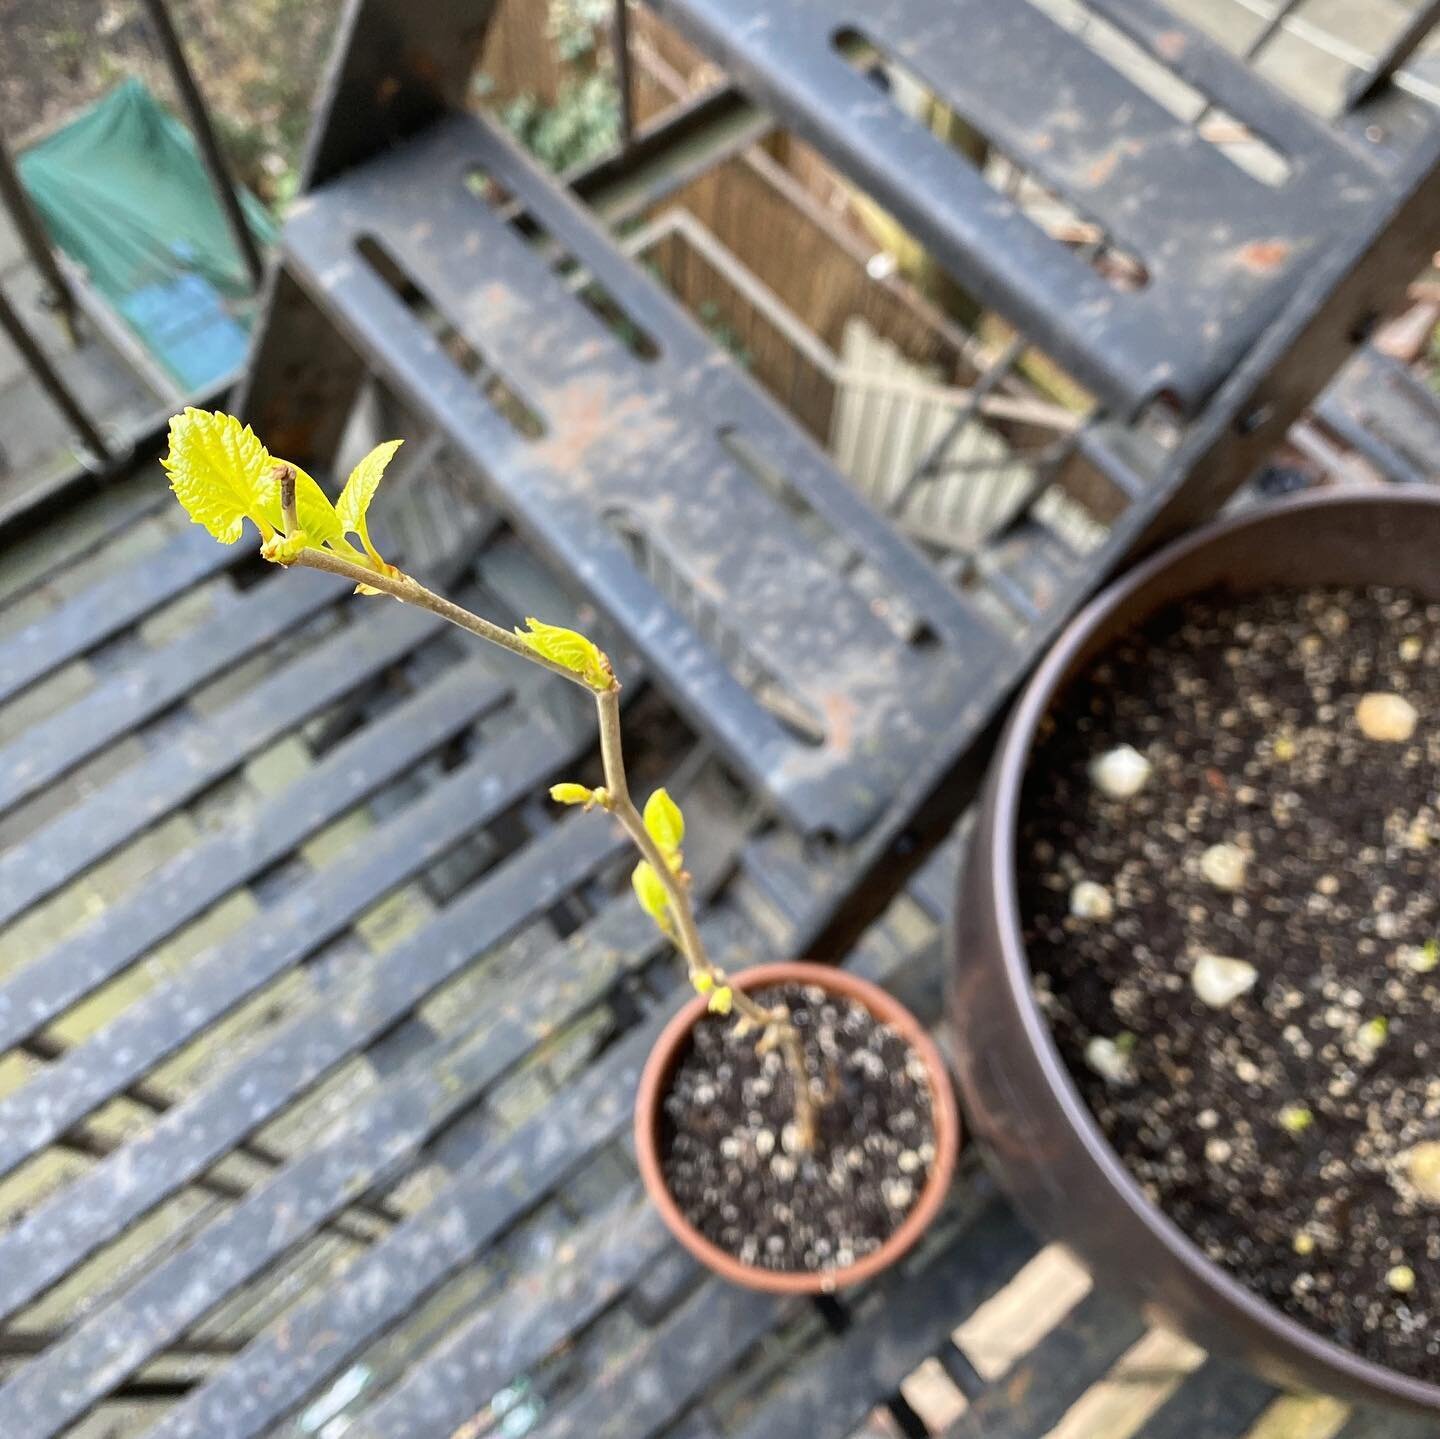 防火梯上的不知名植物開始冒新葉，蔥蒜們也開始長高了。 ⠀
⠀
＊＊＊＊＊
⠀
⠀
A unknown plant on the fire escape is growing leaves, and the scallion garlic patch is growing upwards!